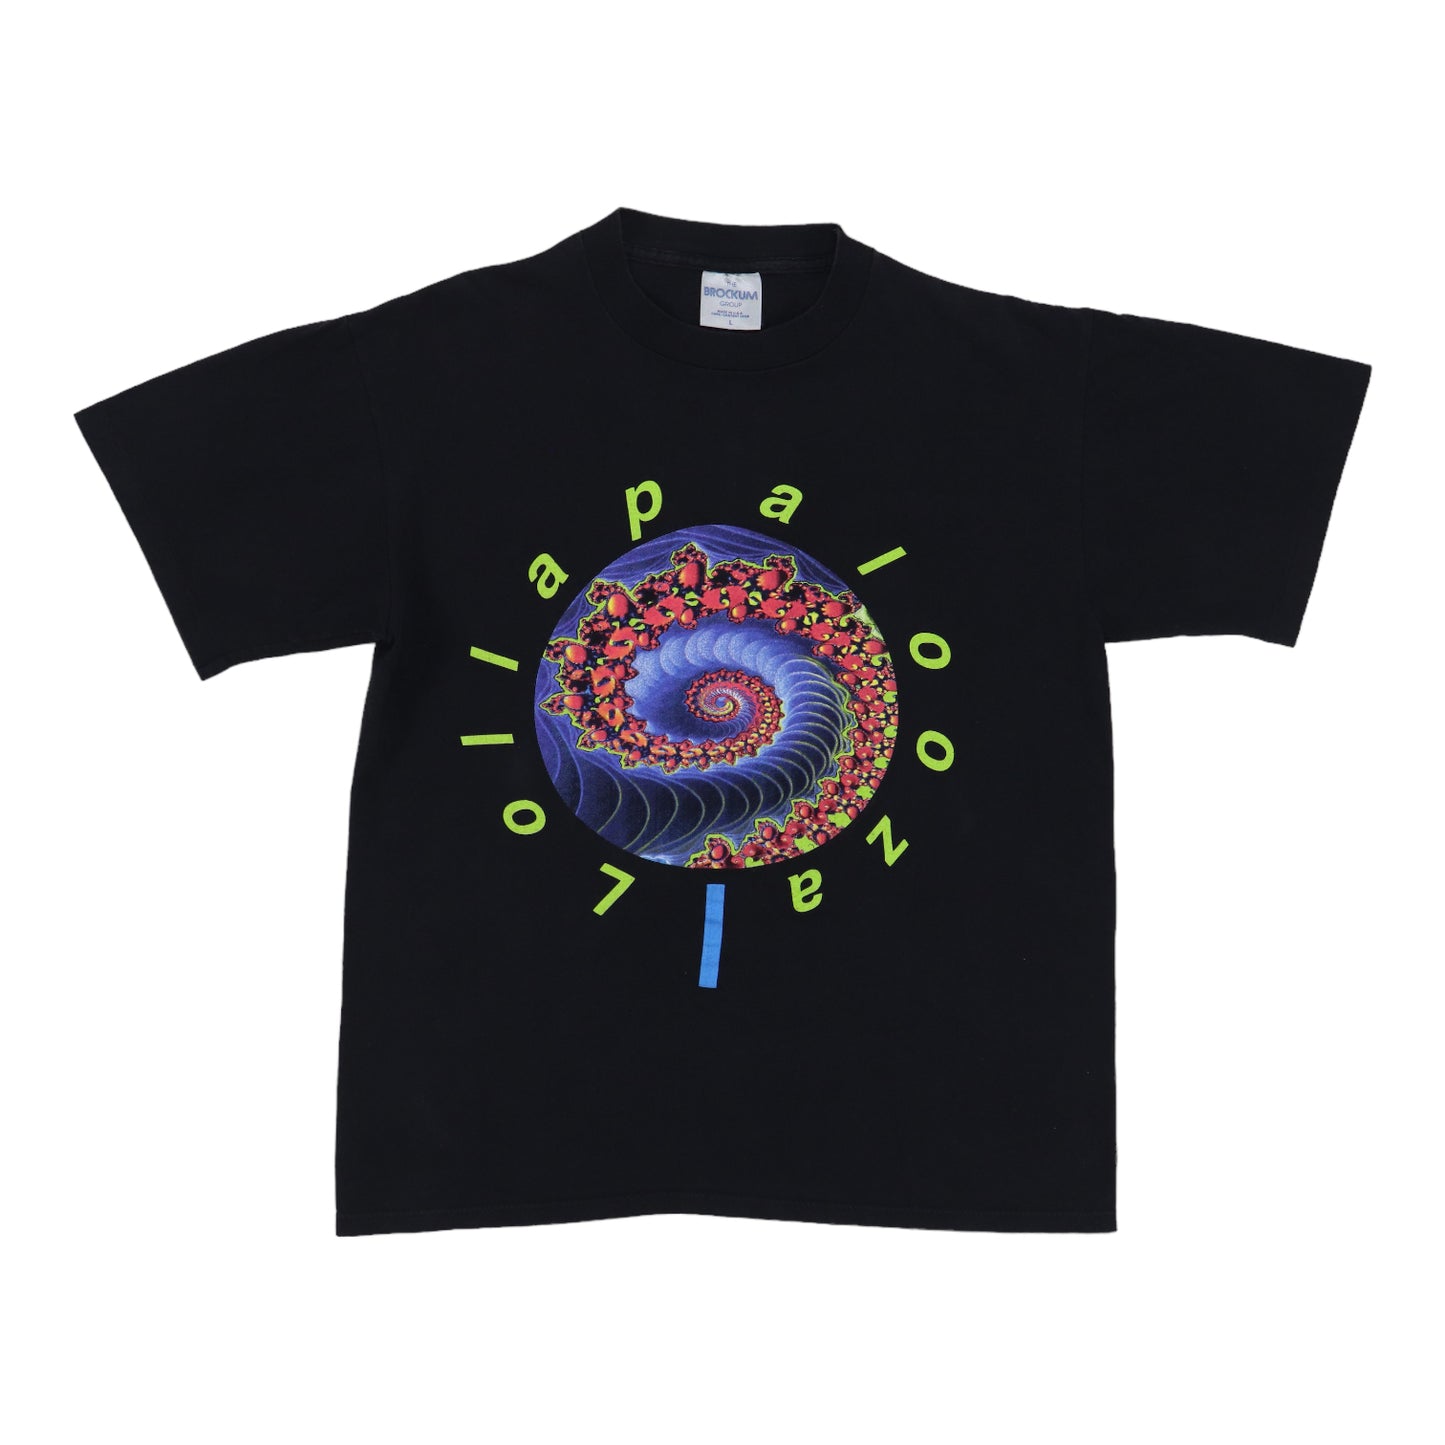 1991 Lollapalooza Tour Shirt